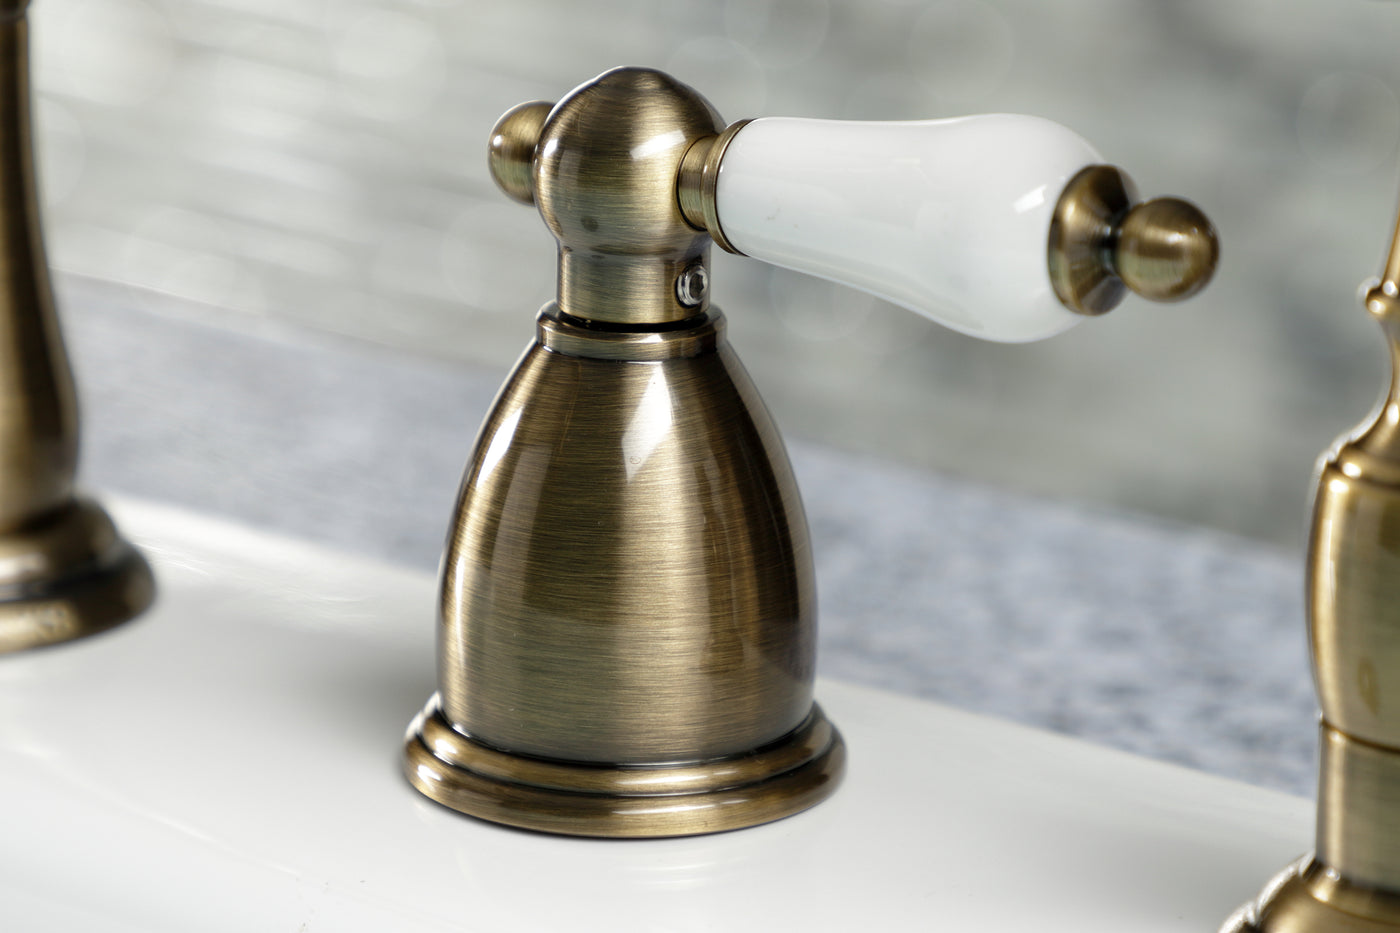 Elements of Design EB1793PLBS Widespread Kitchen Faucet with Brass Sprayer, Antique Brass